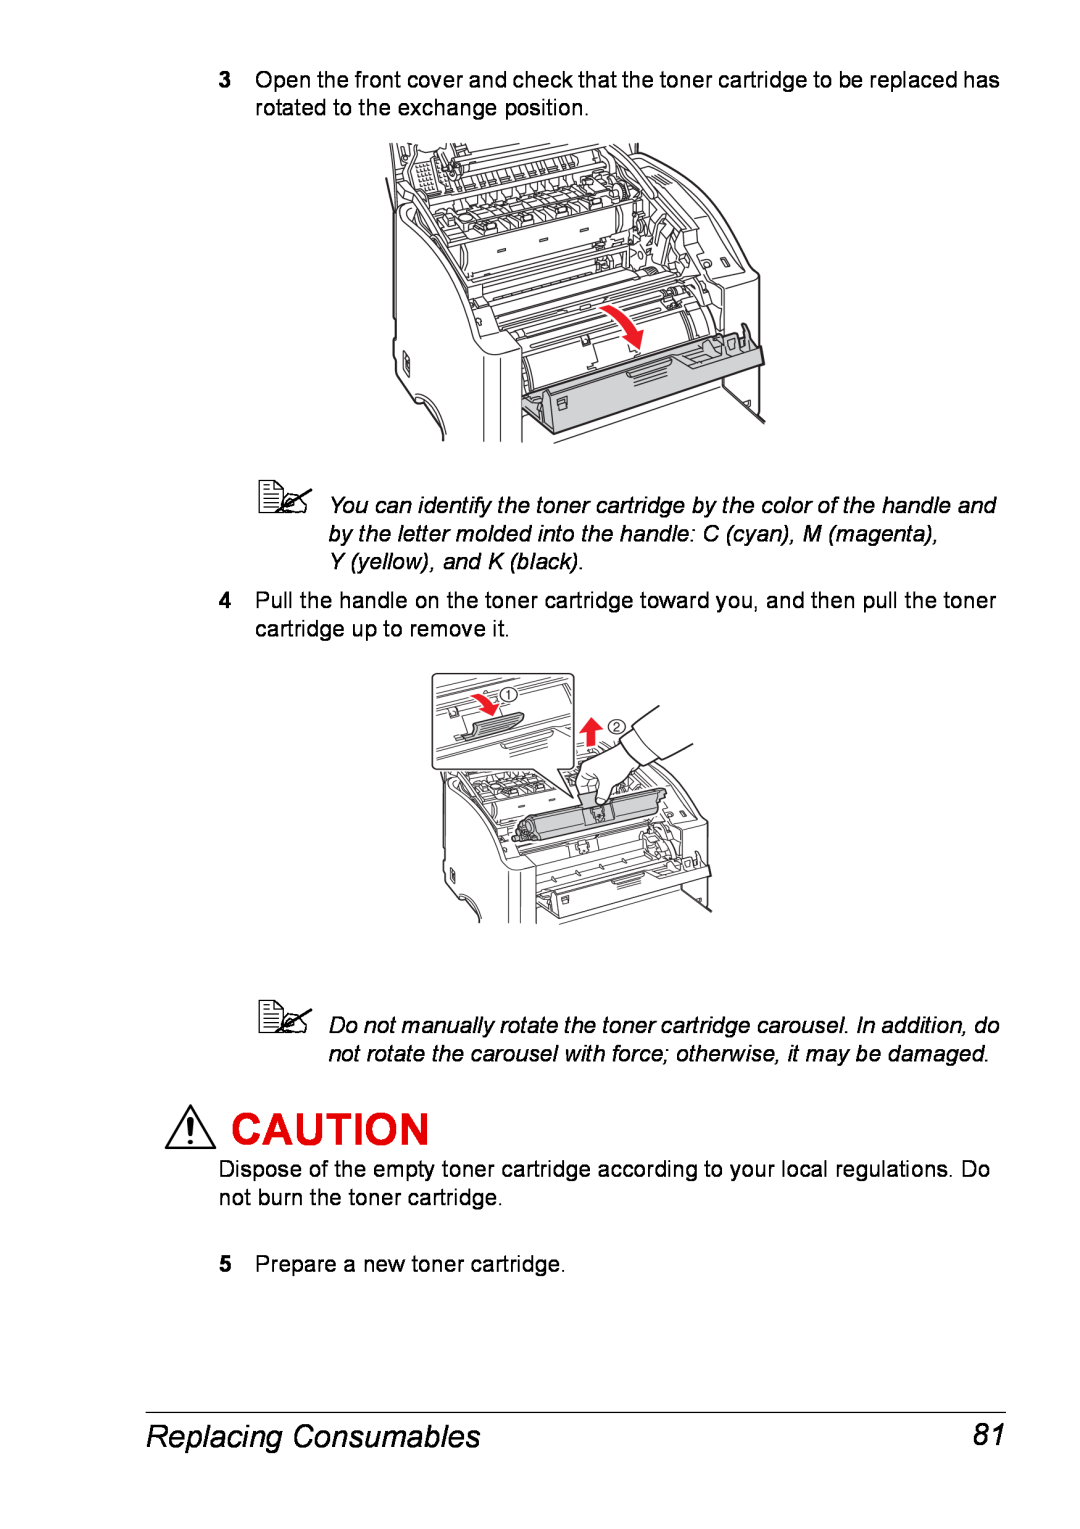 Xerox 6120 manual Replacing Consumables, Y yellow, and K black, Prepare a new toner cartridge 